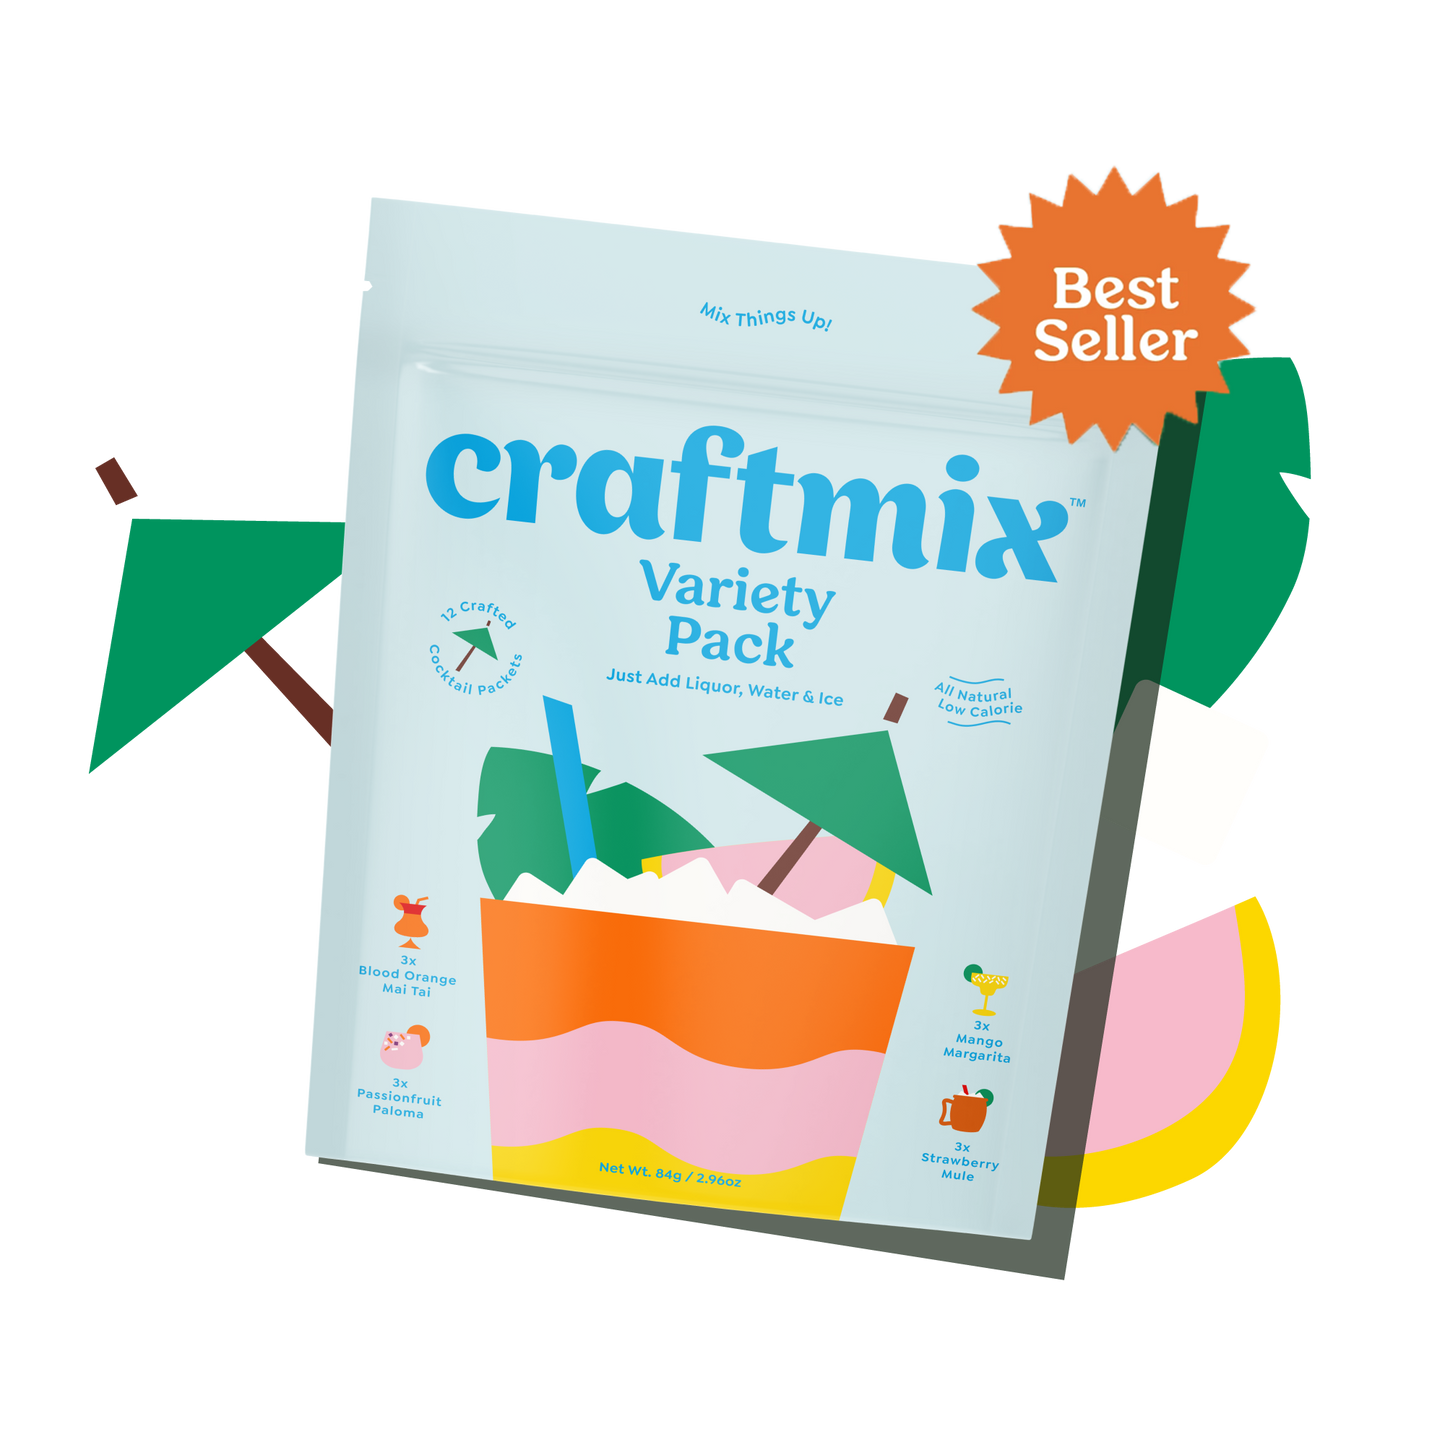 Craftmix Variety 12 pack